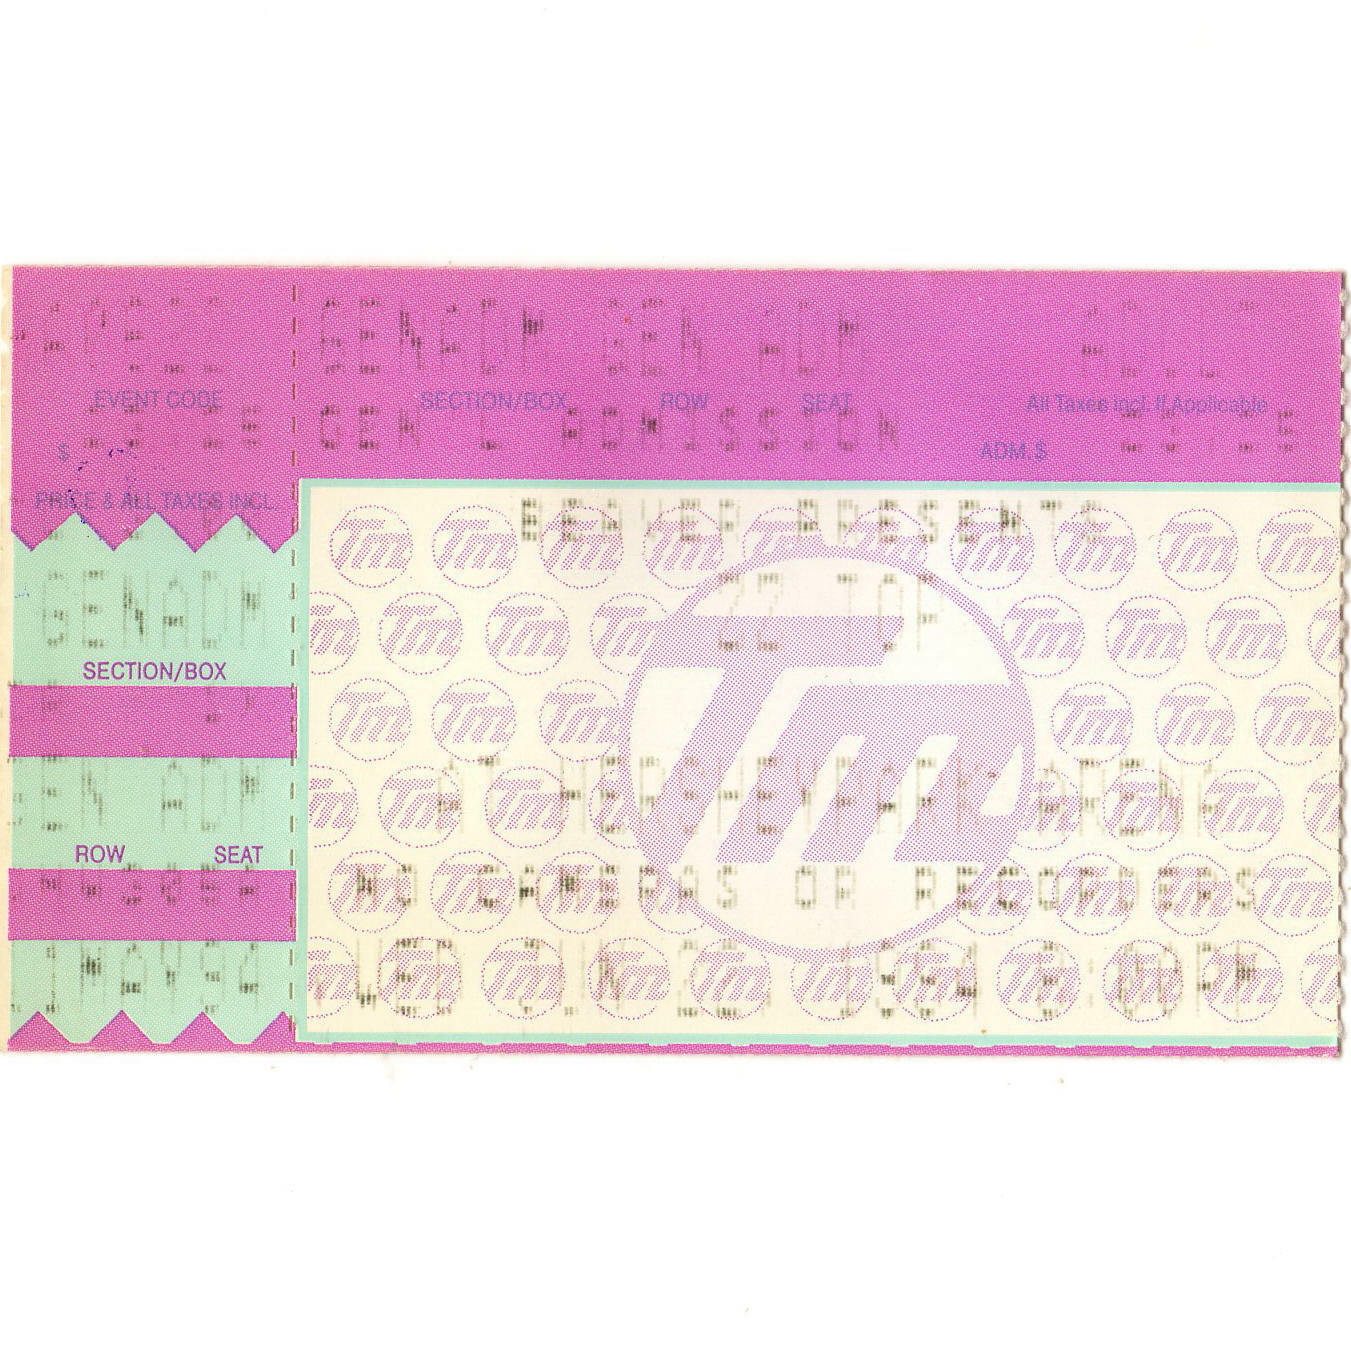 Zz Top Concert Ticket Stub Hershey Park 6/22/94 Hershey Pa Arena Antenna Tour